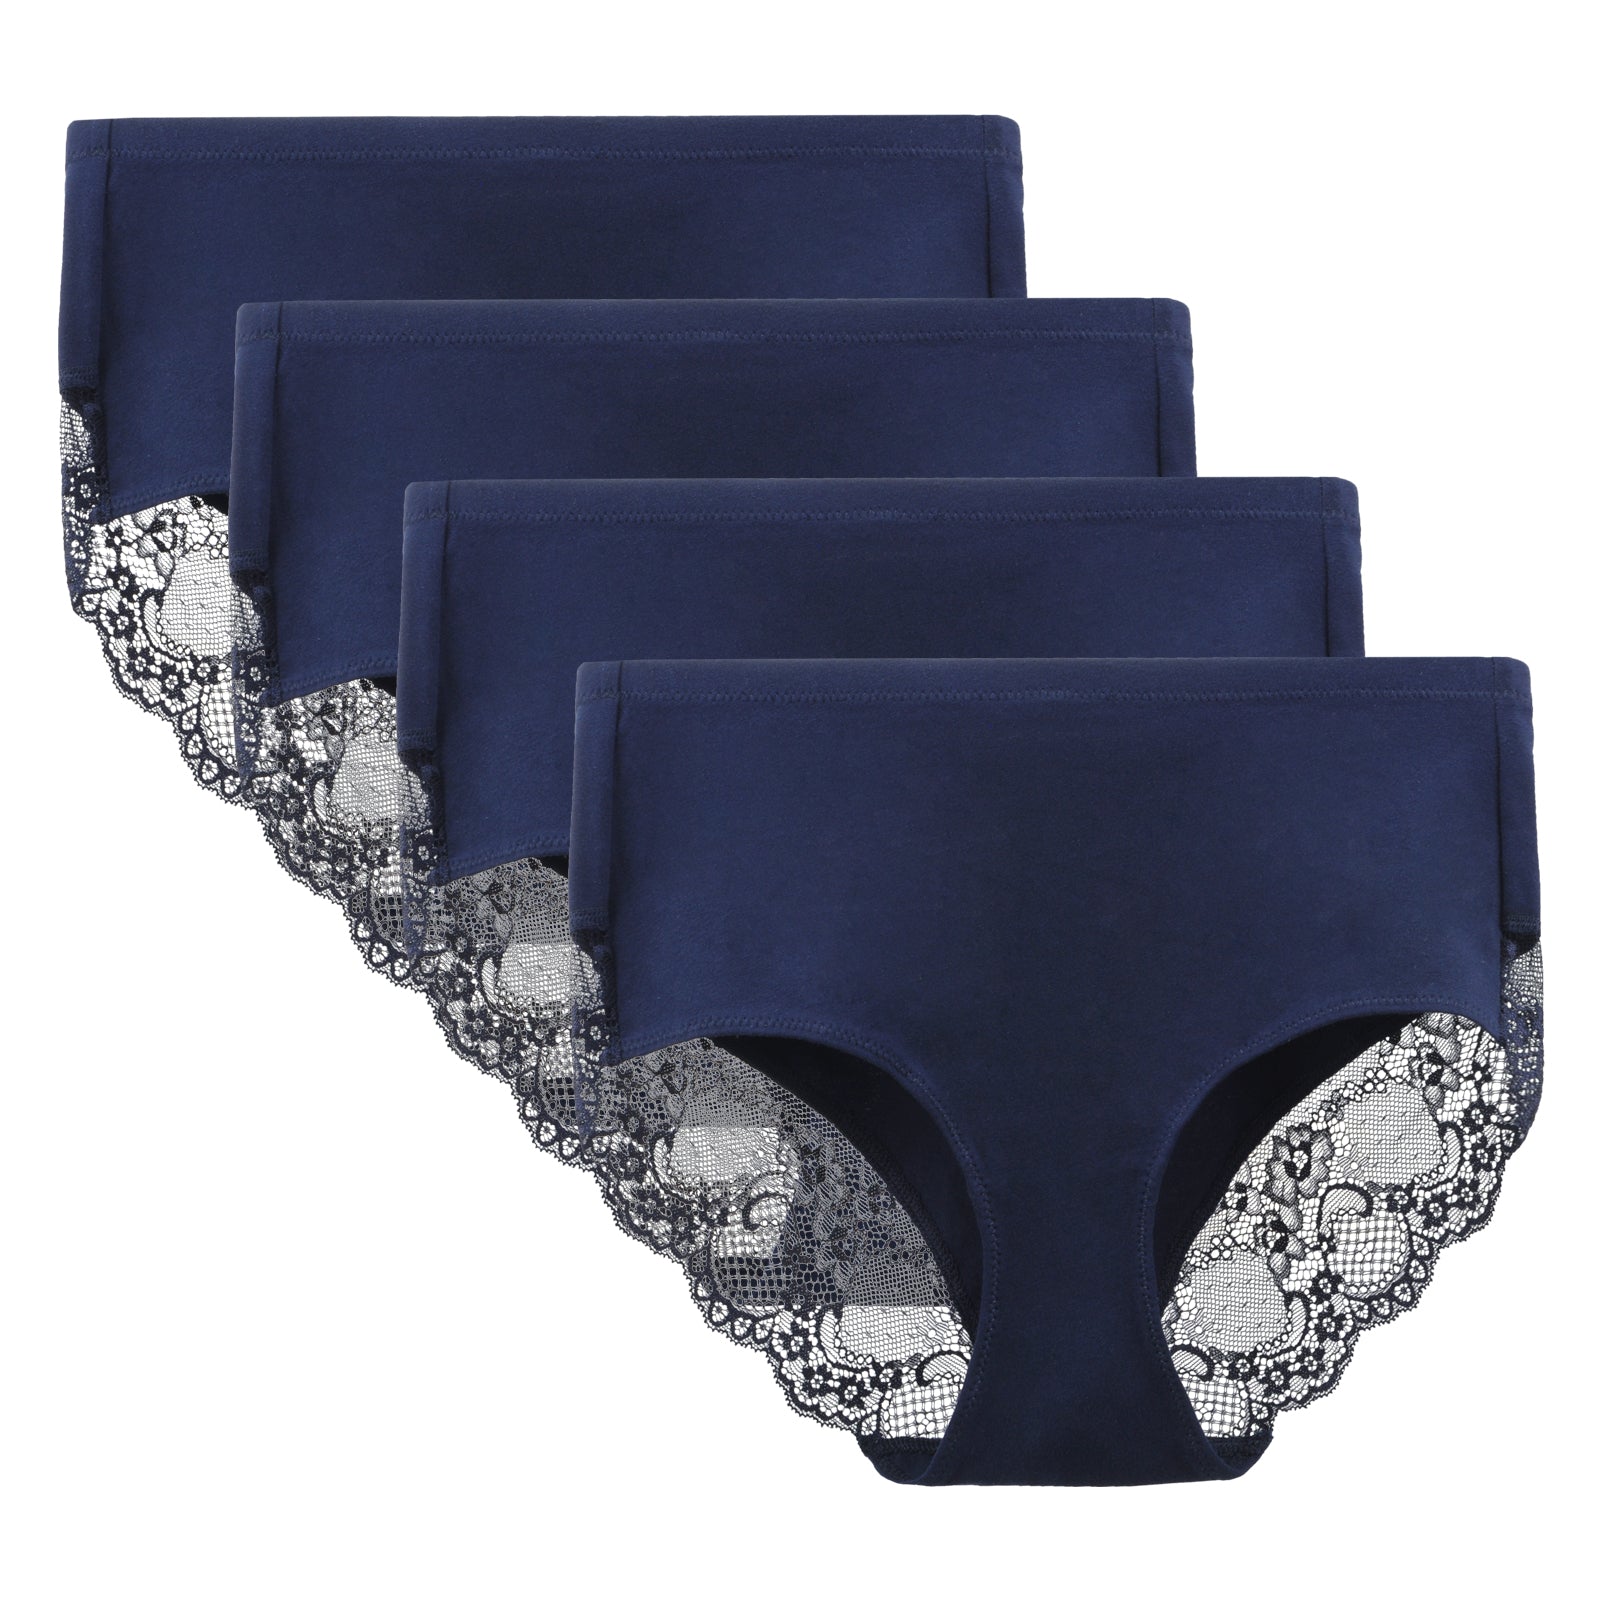 Tompik Women's Assorted colour Cotton Spandex High Waist Panty